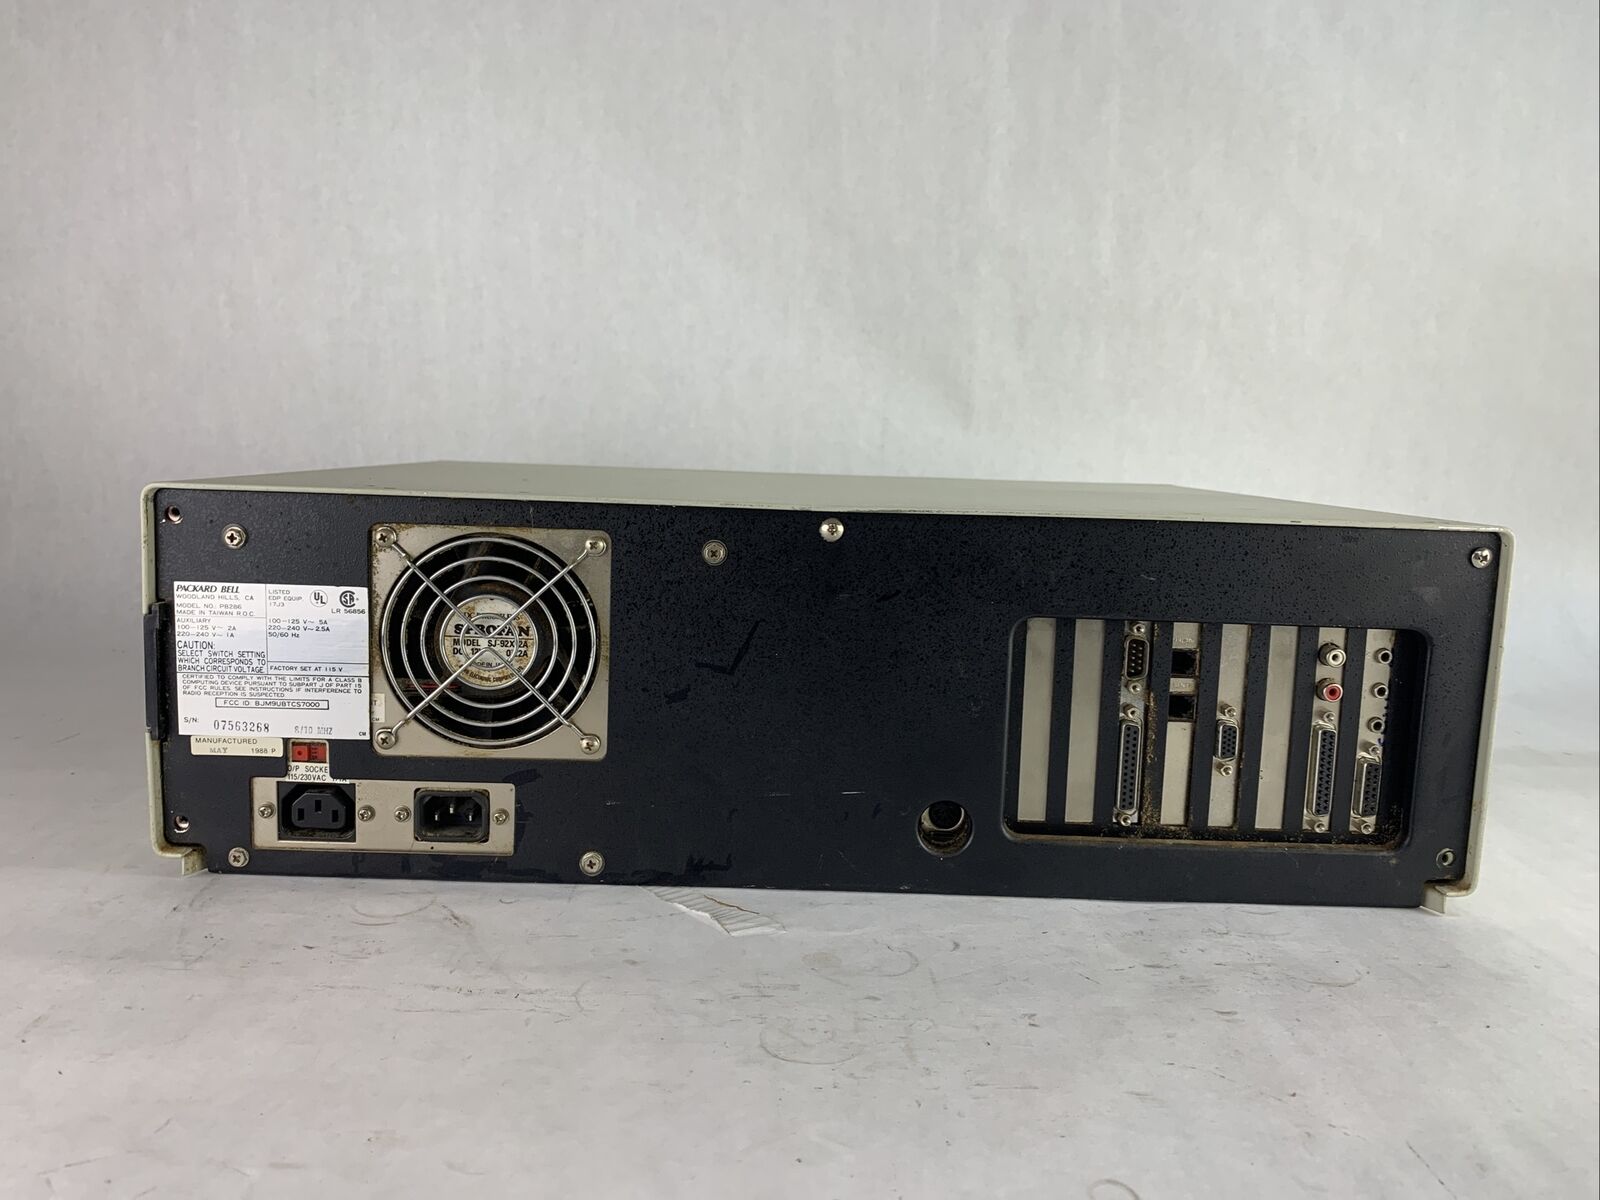 Packard Bell PB286 DT Cyrix CX486DX 40MHz 4MB RAM No HDD No OS